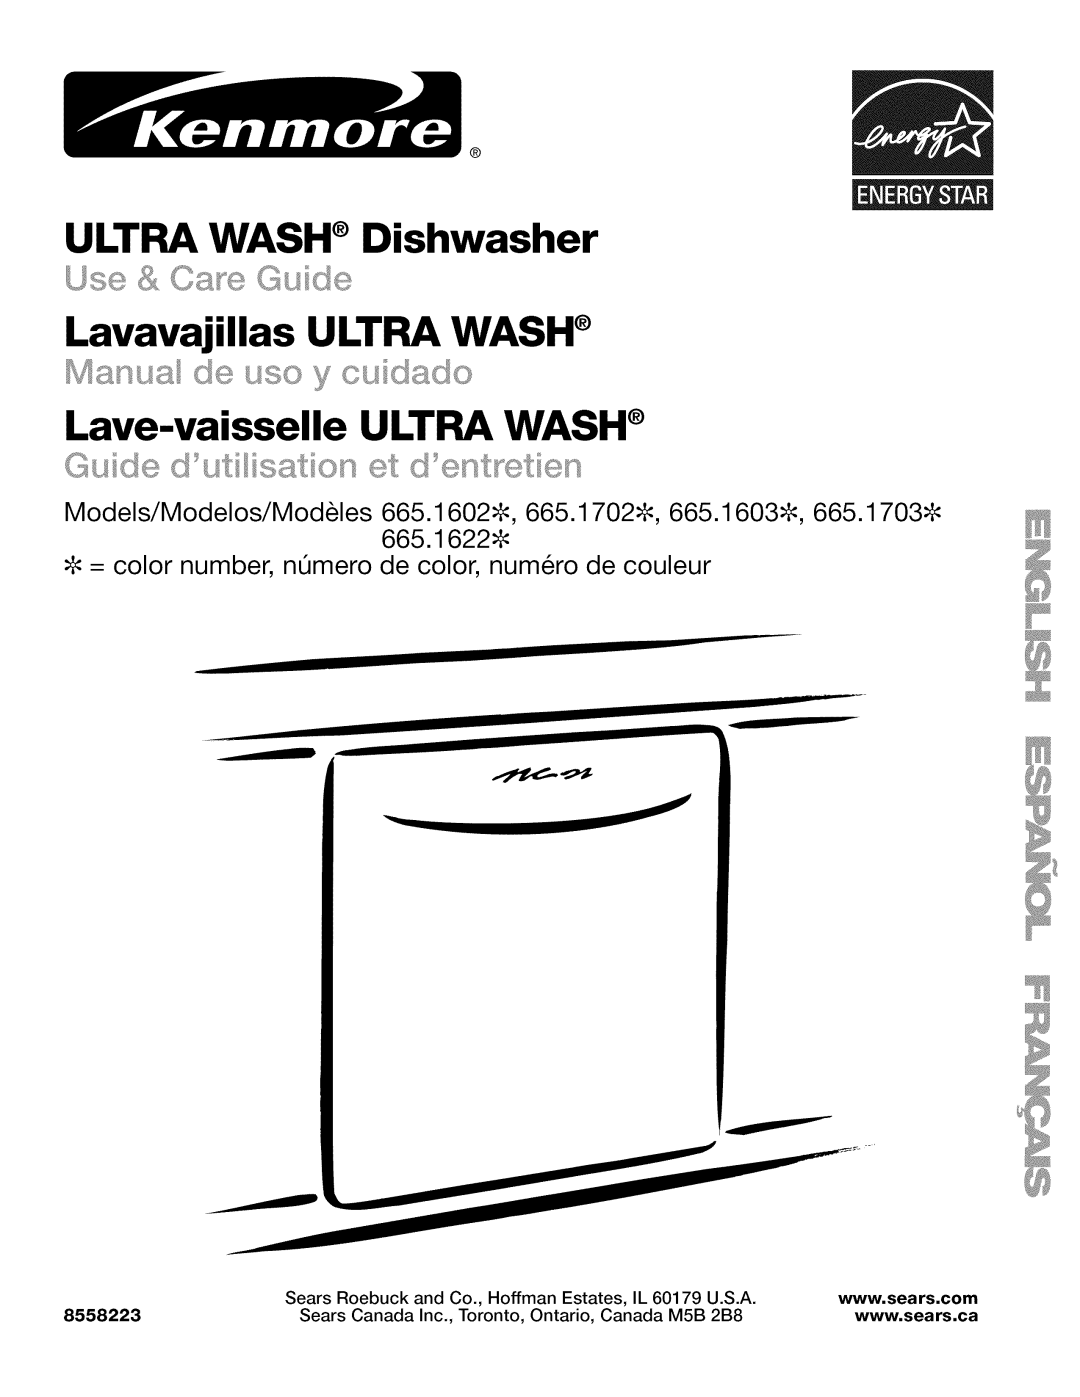 Kenmore manual Gd _4_ _UI_, _;_l_, 665.1622¢, ULTRA WASH Dishwasher Lavavajillas ULTRA WASH, Lave-vaisselleULTRA WASH 